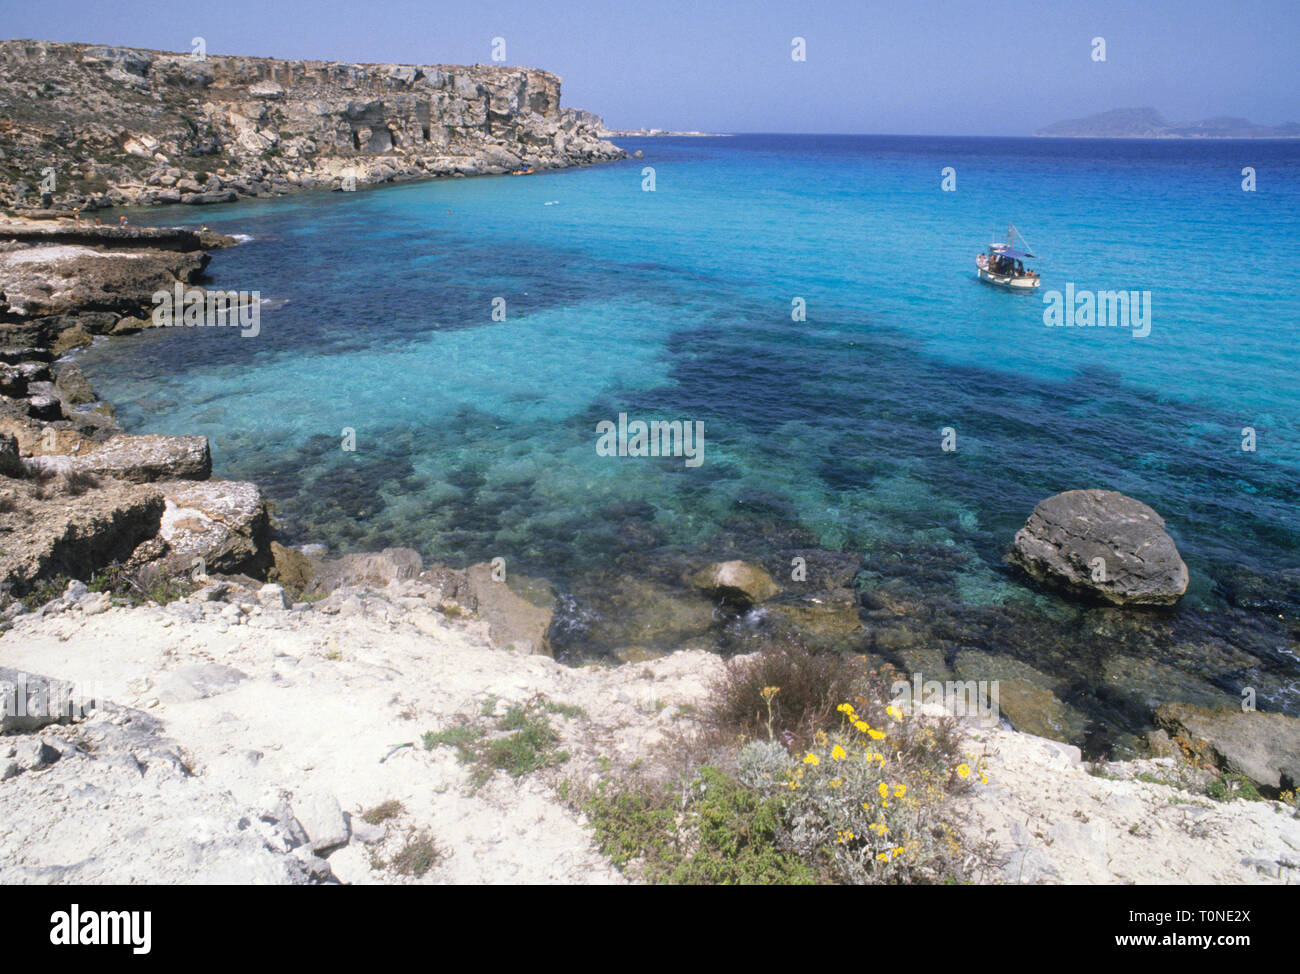 L'isola di Favignana, cala rossa, le isole egadi, provincia di Trapani,  Sicilia, Italia Foto stock - Alamy